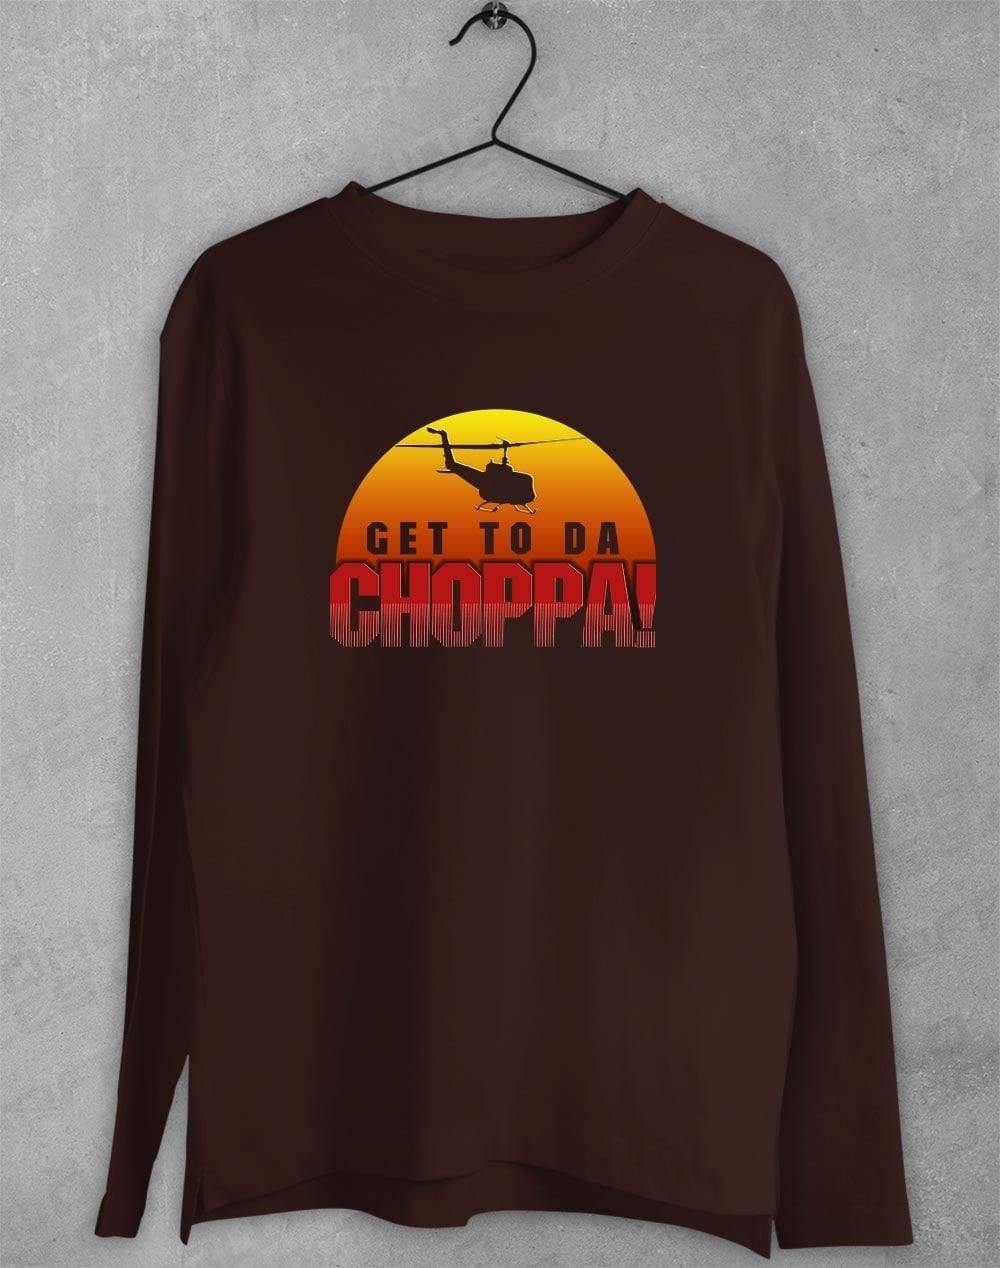 Get To Da Choppa Long Sleeve T-Shirt S / Dark Chocolate  - Off World Tees